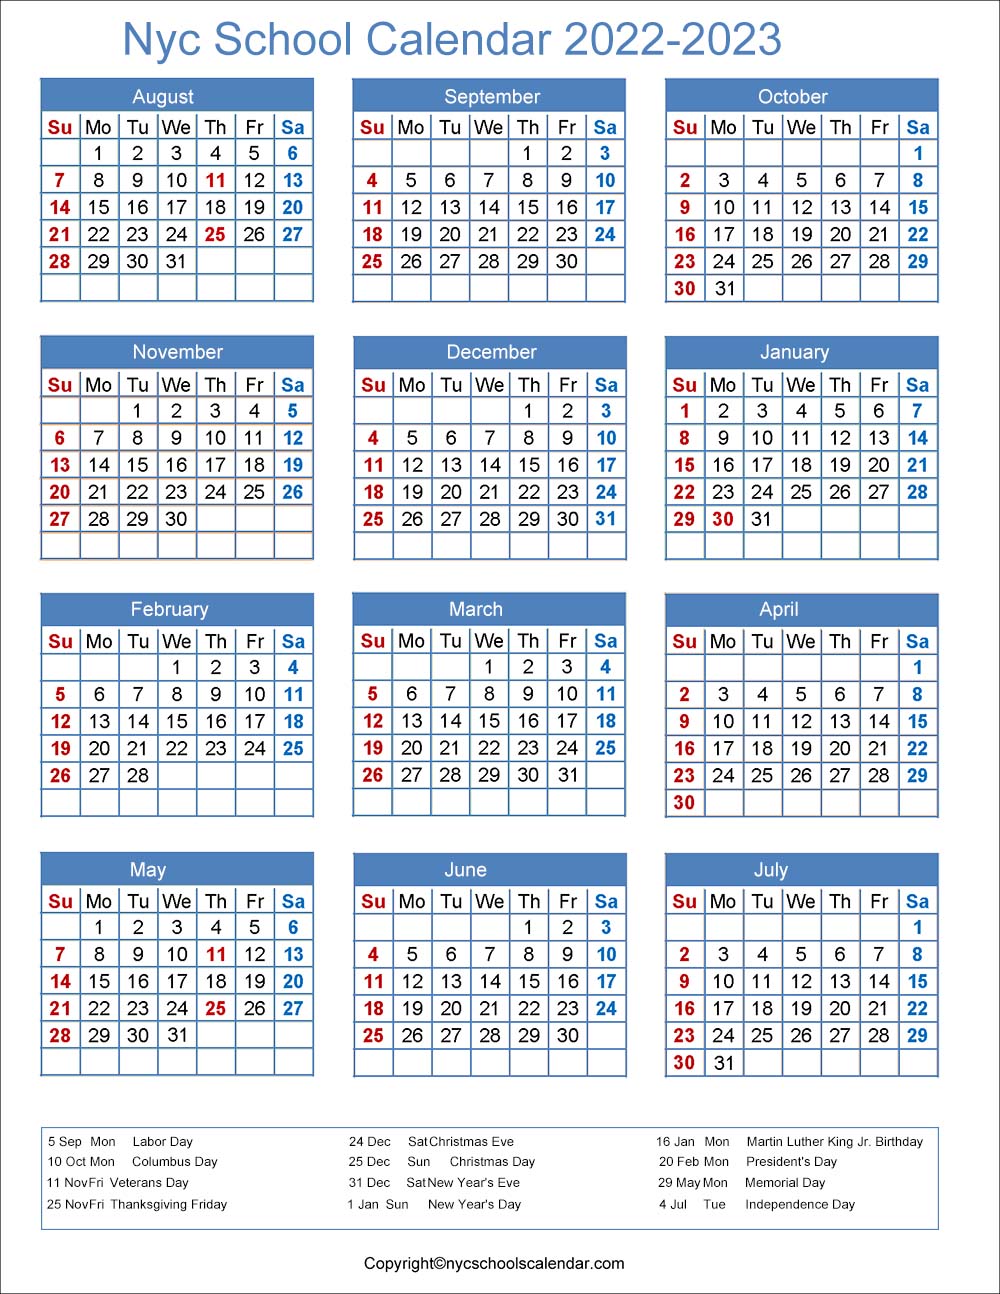 NYC School Calendar 2022